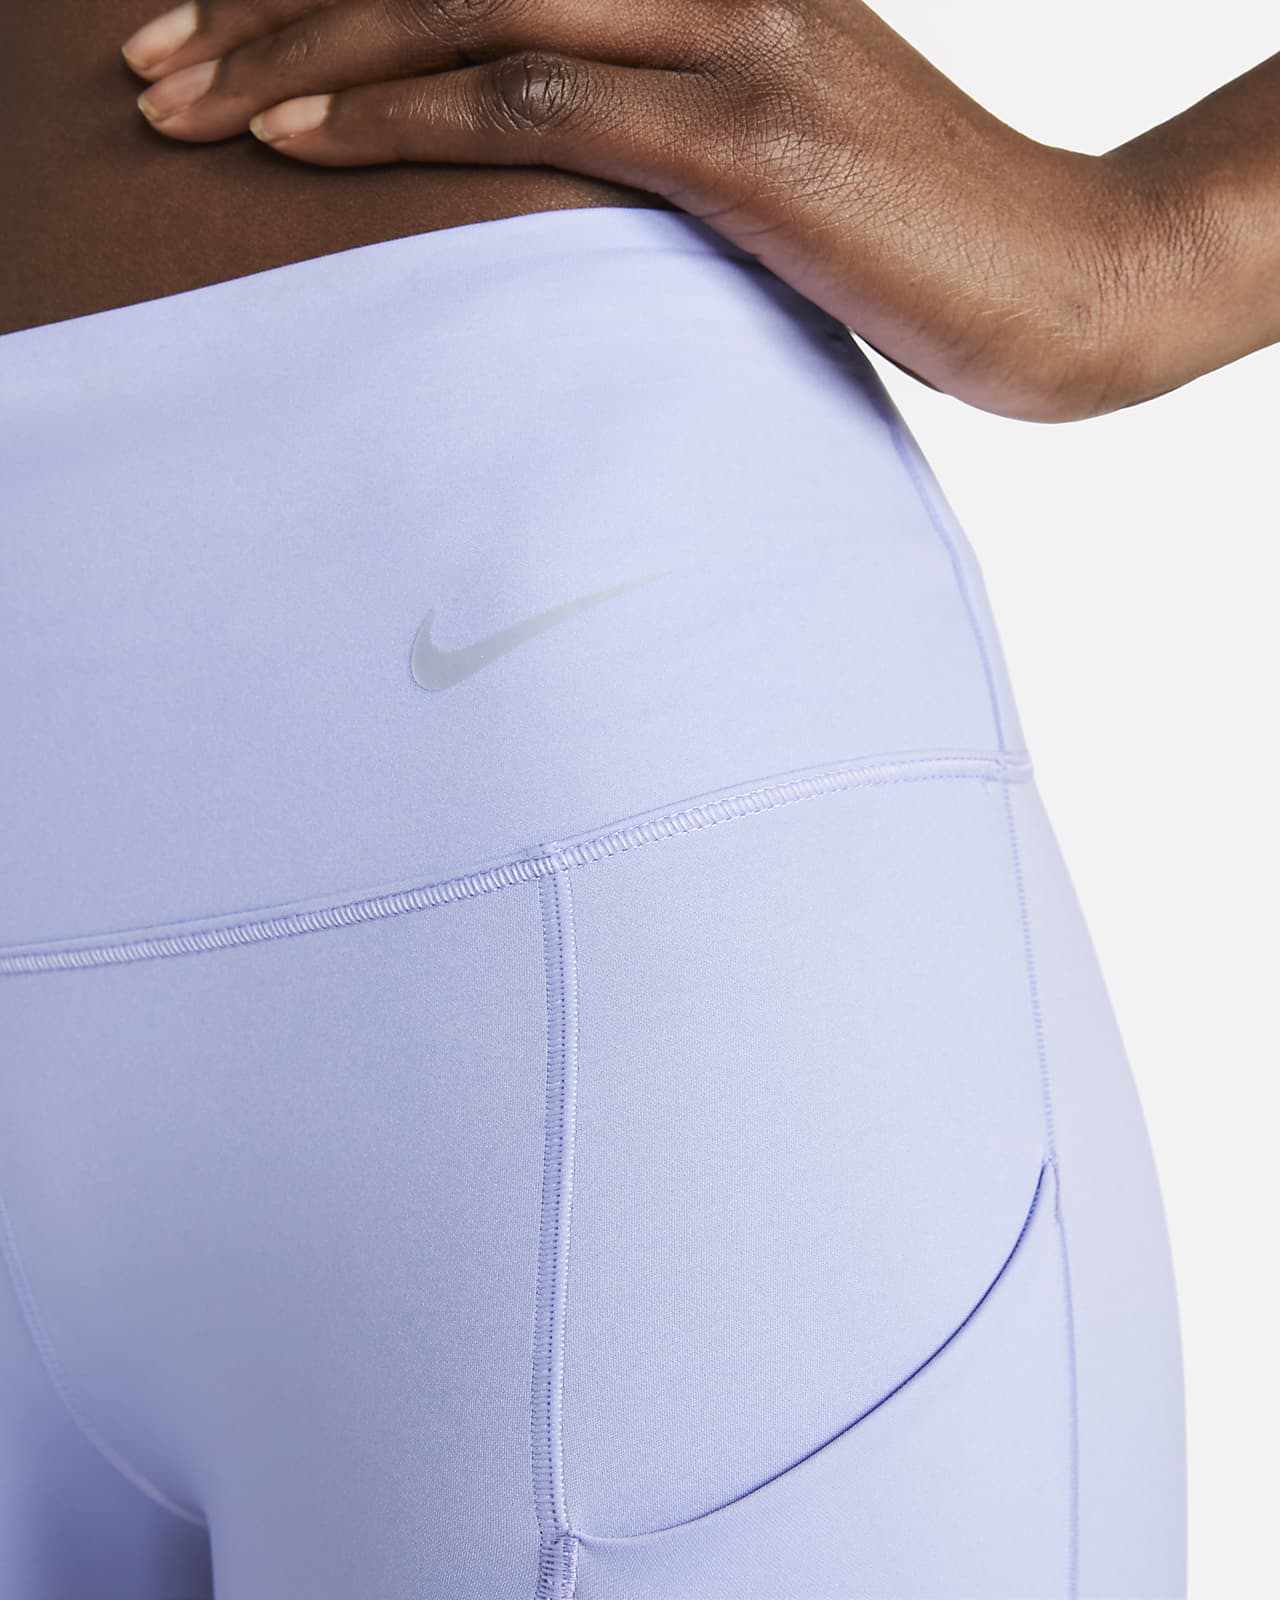 Nike Zenvy Women's Gentle-Support High-Waisted Cropped Leggings (Plus Size).  Nike.com